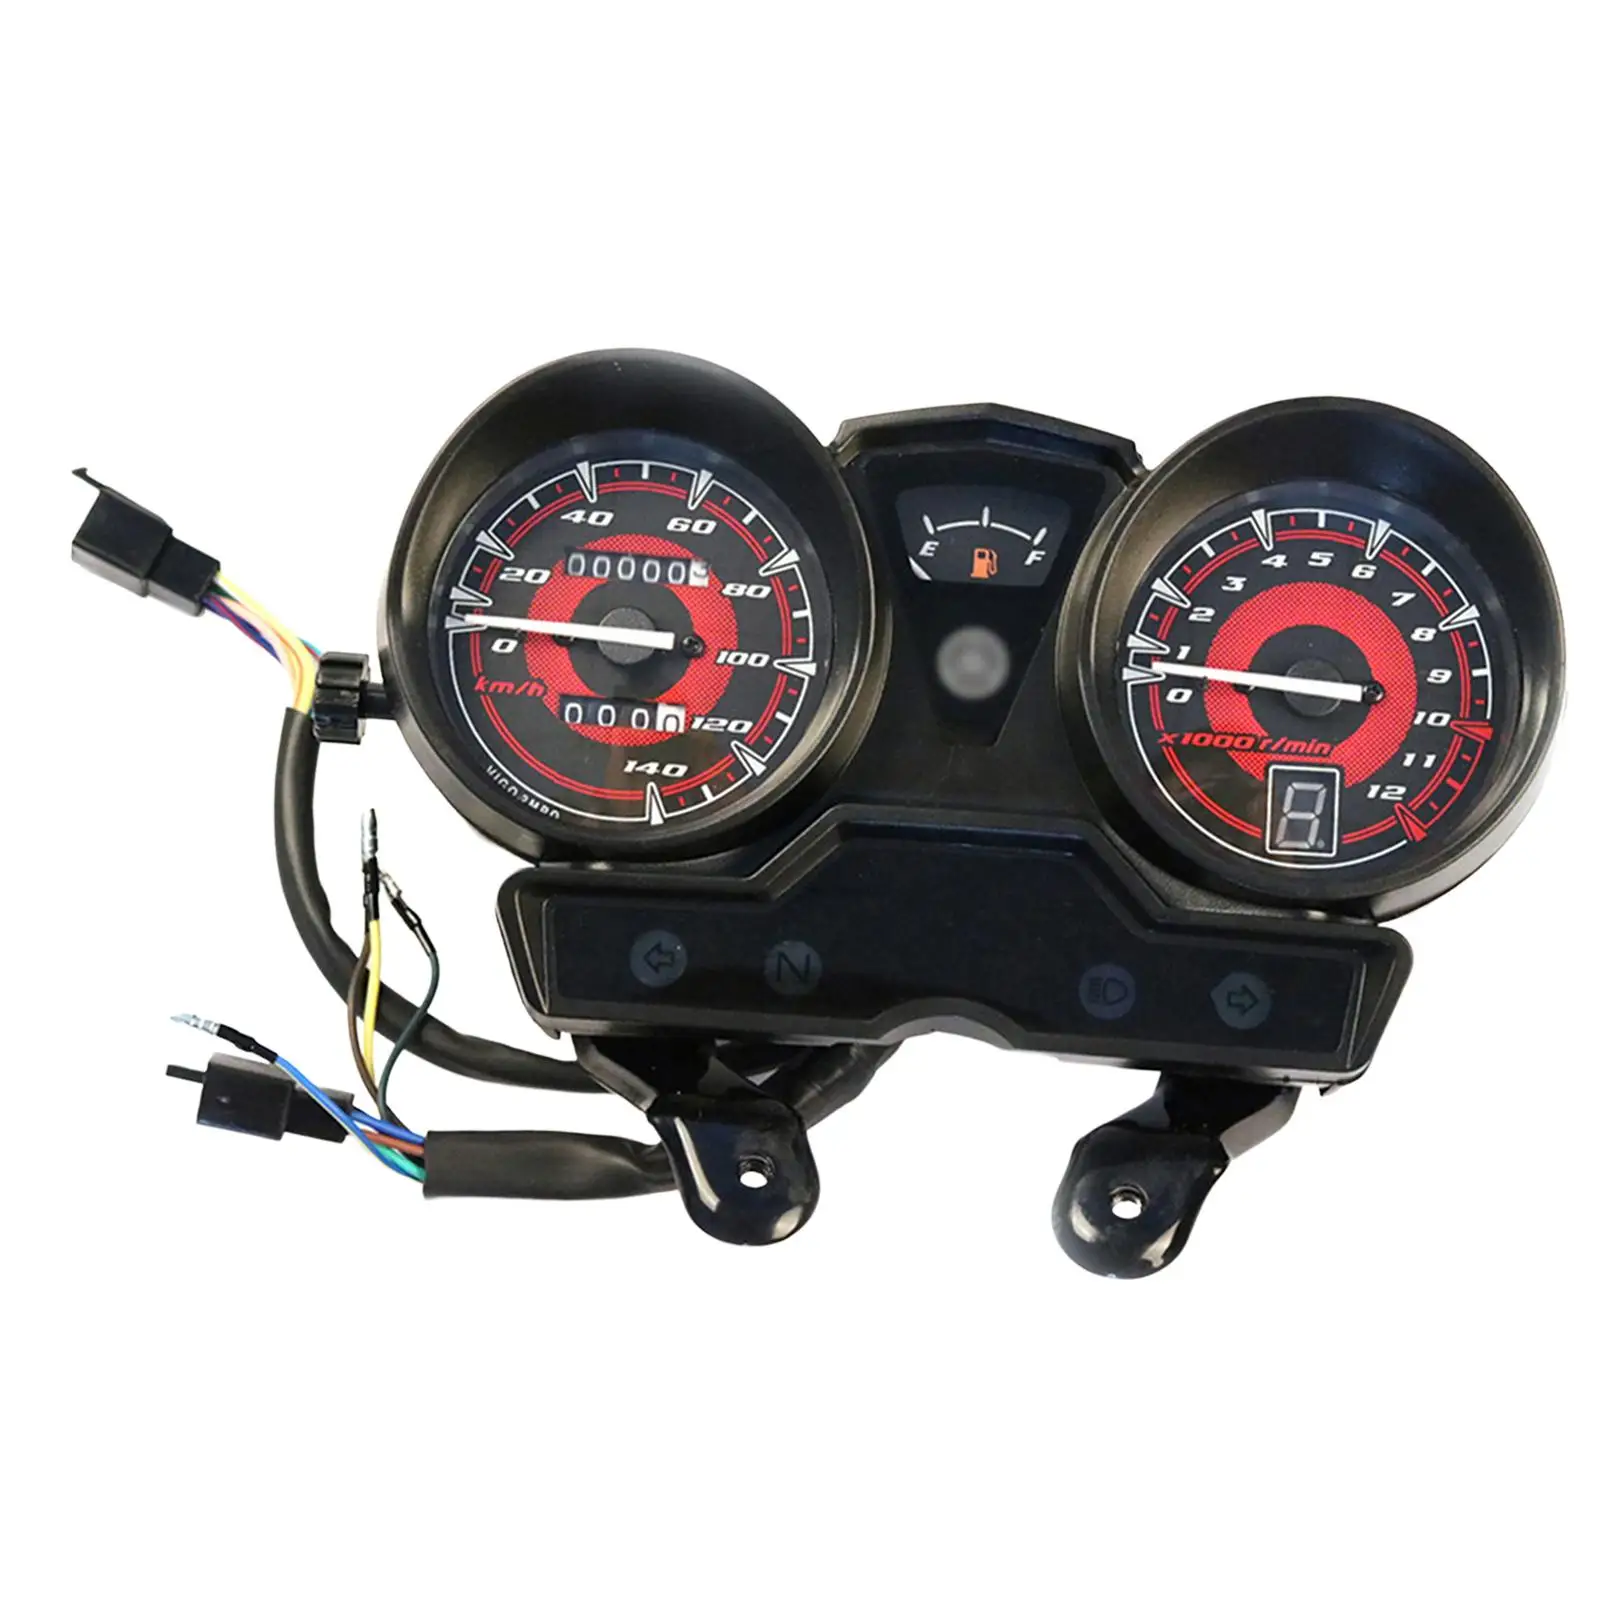 LED Digital Speedometer Speed Gauge Modification for Yamaha Ybr125 Jym125 Accessories